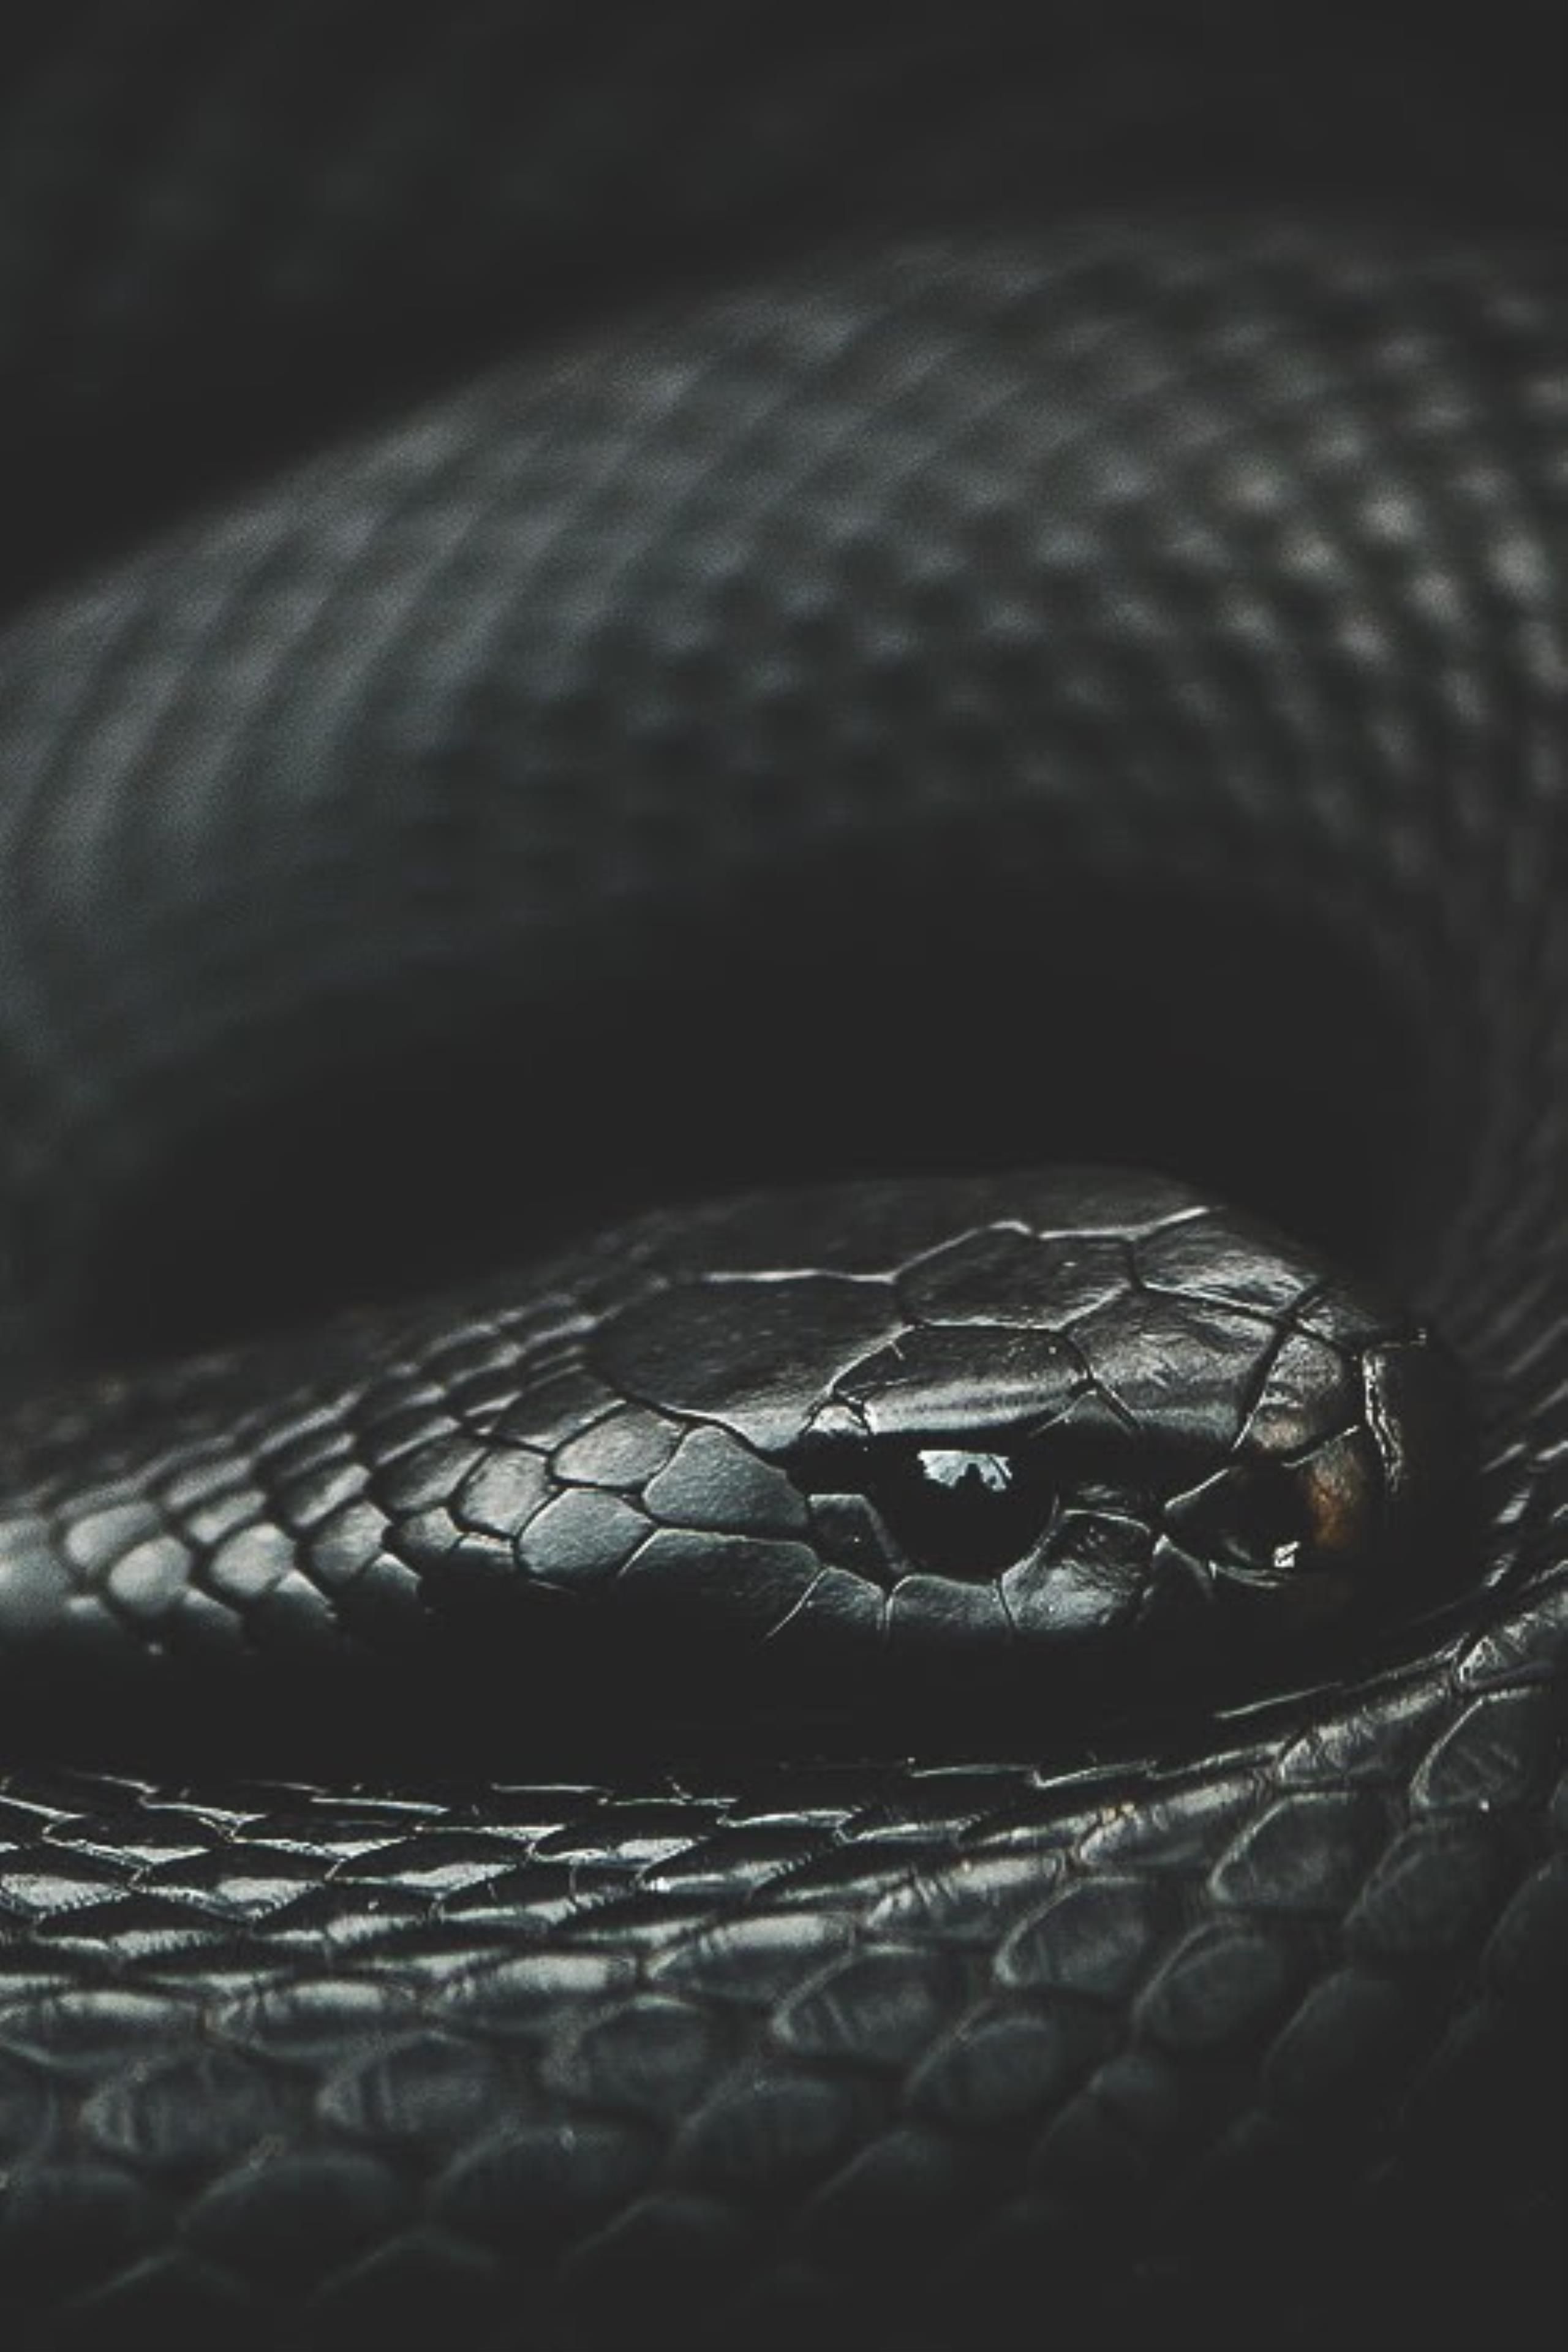 AMOLED Animal Wallpaper. Black mamba snake, Shades of black, Snake